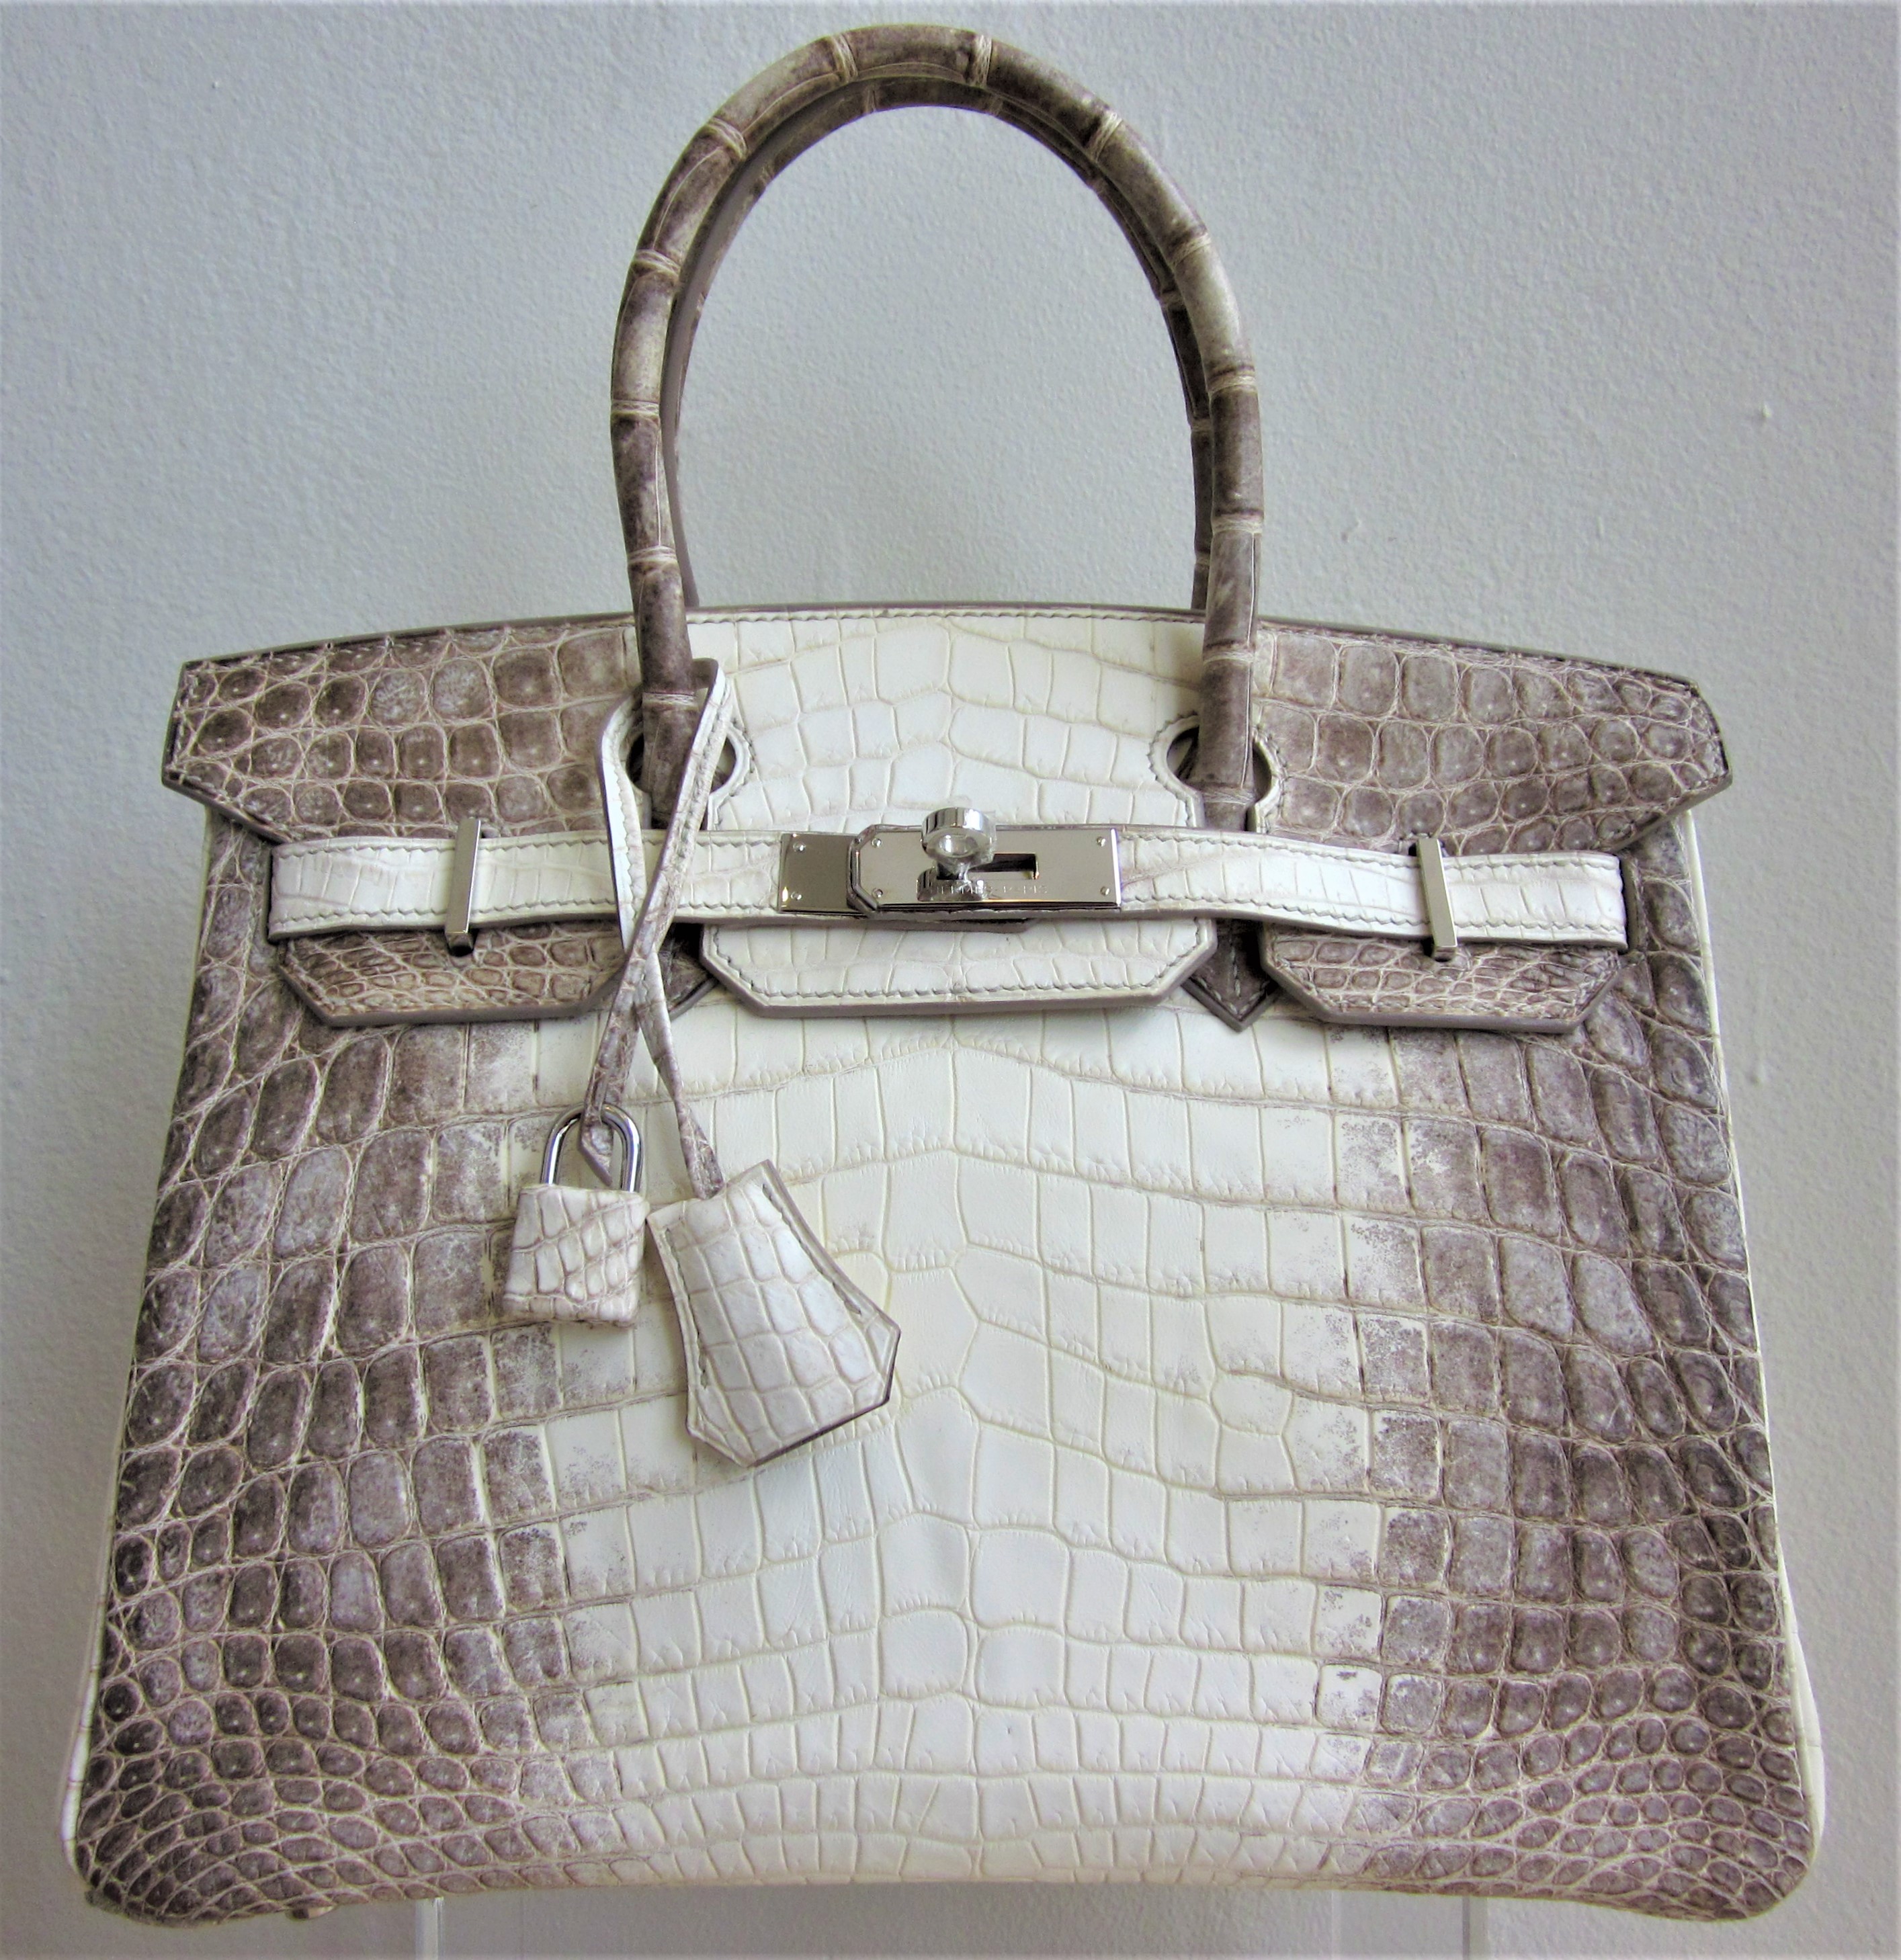 Hermes 30cm Himalaya Crocodile Birkin Bag  Hermes handbags, Birkin bag,  Hermes bag birkin